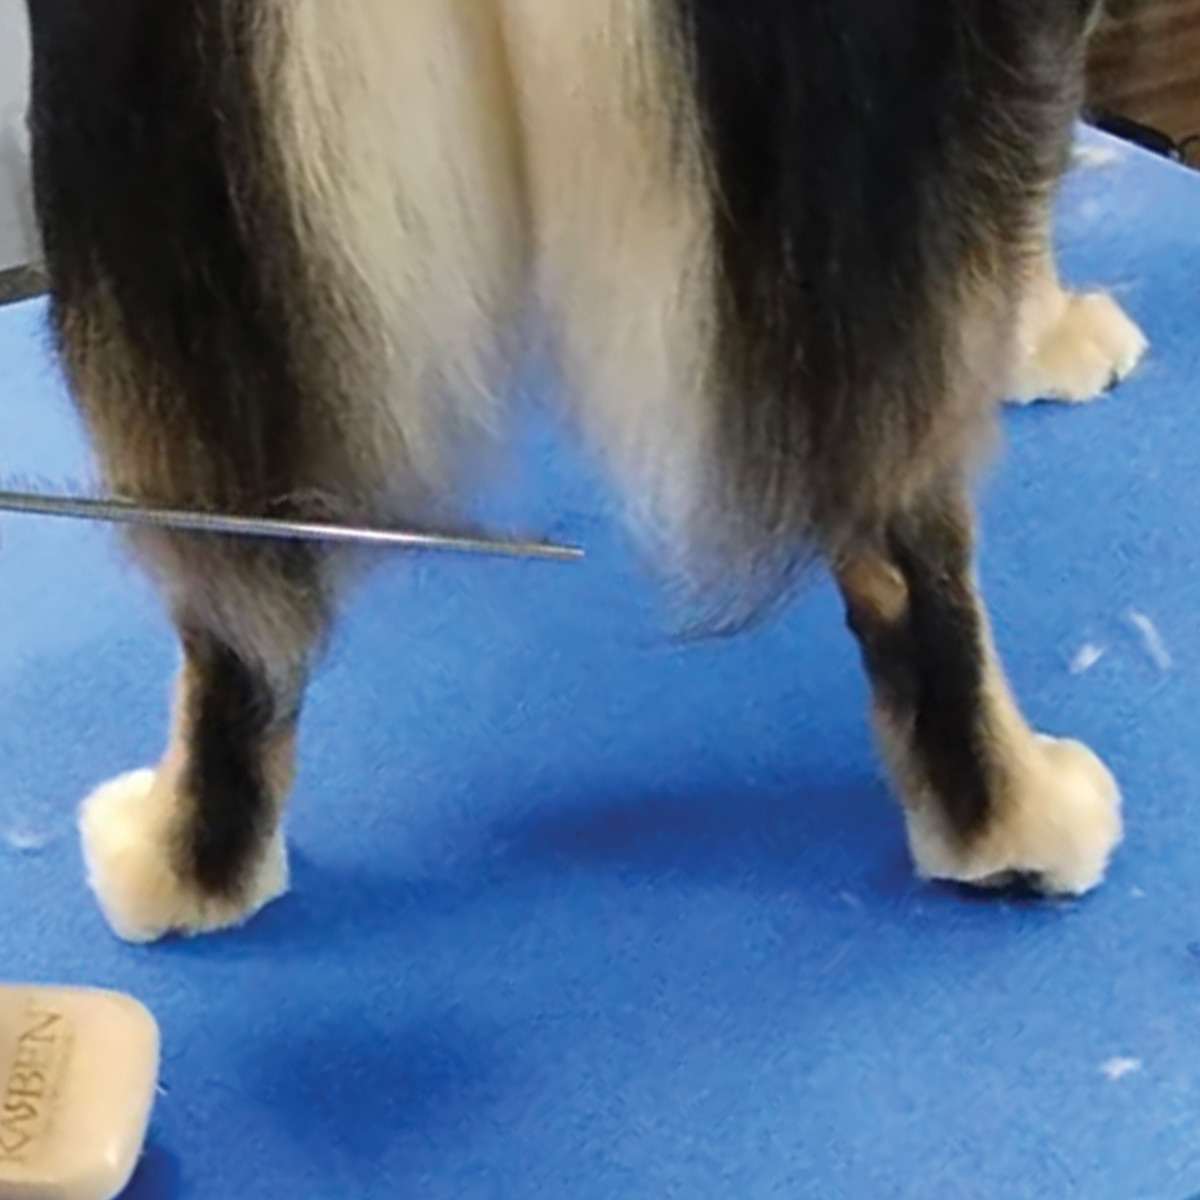 hand using scissors to trim fur on hind legs of dog